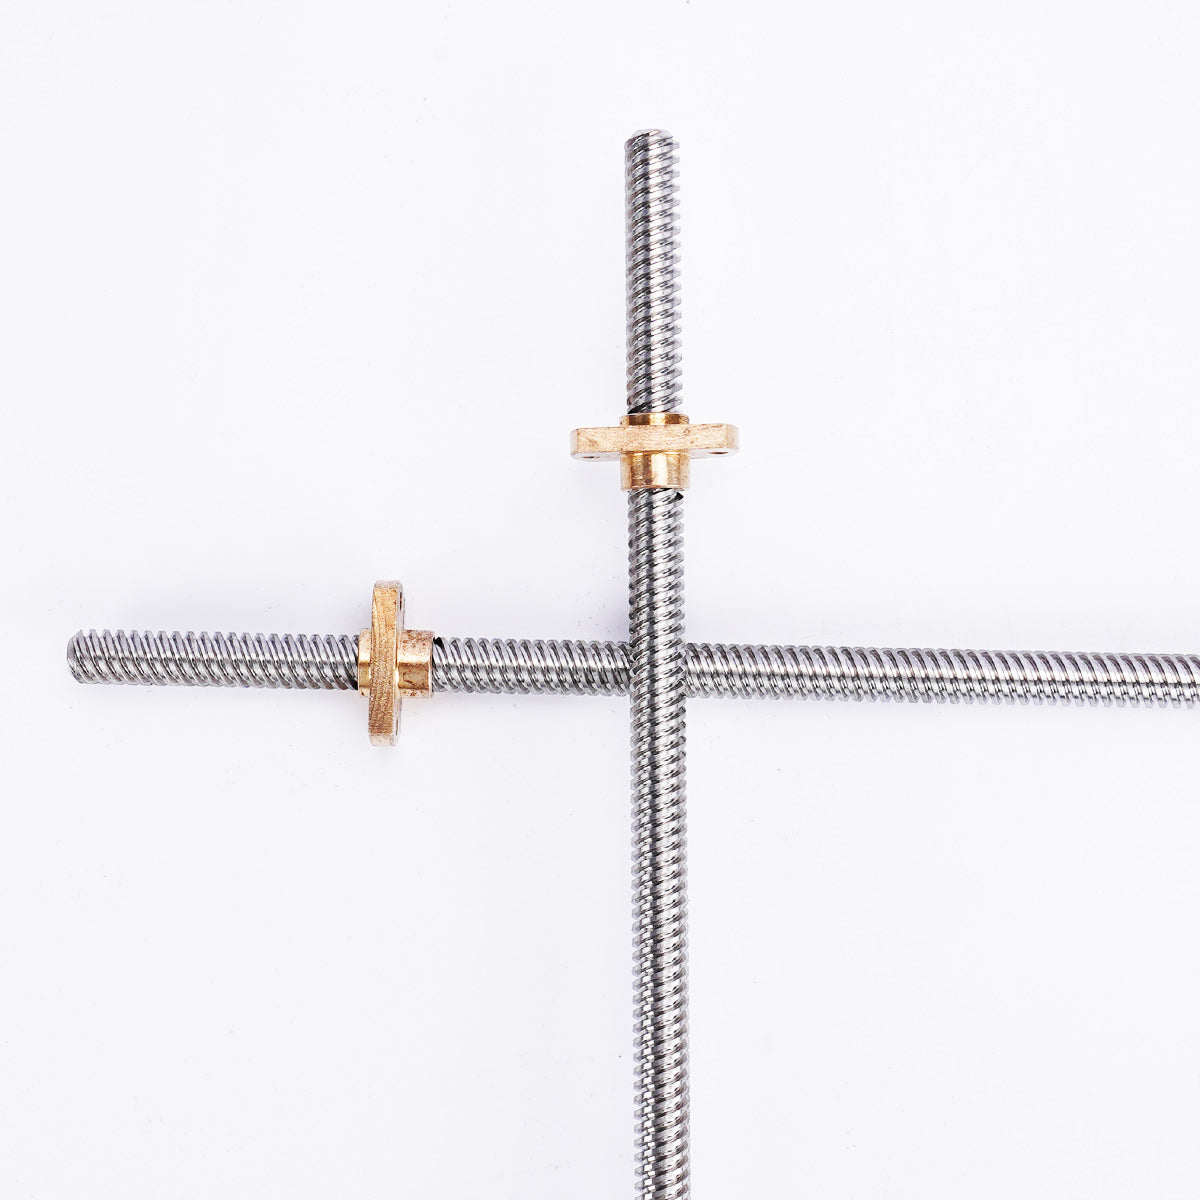 Thinker SE T8 Stainless Steel Threaded Rod Lead Screw(2pcs)